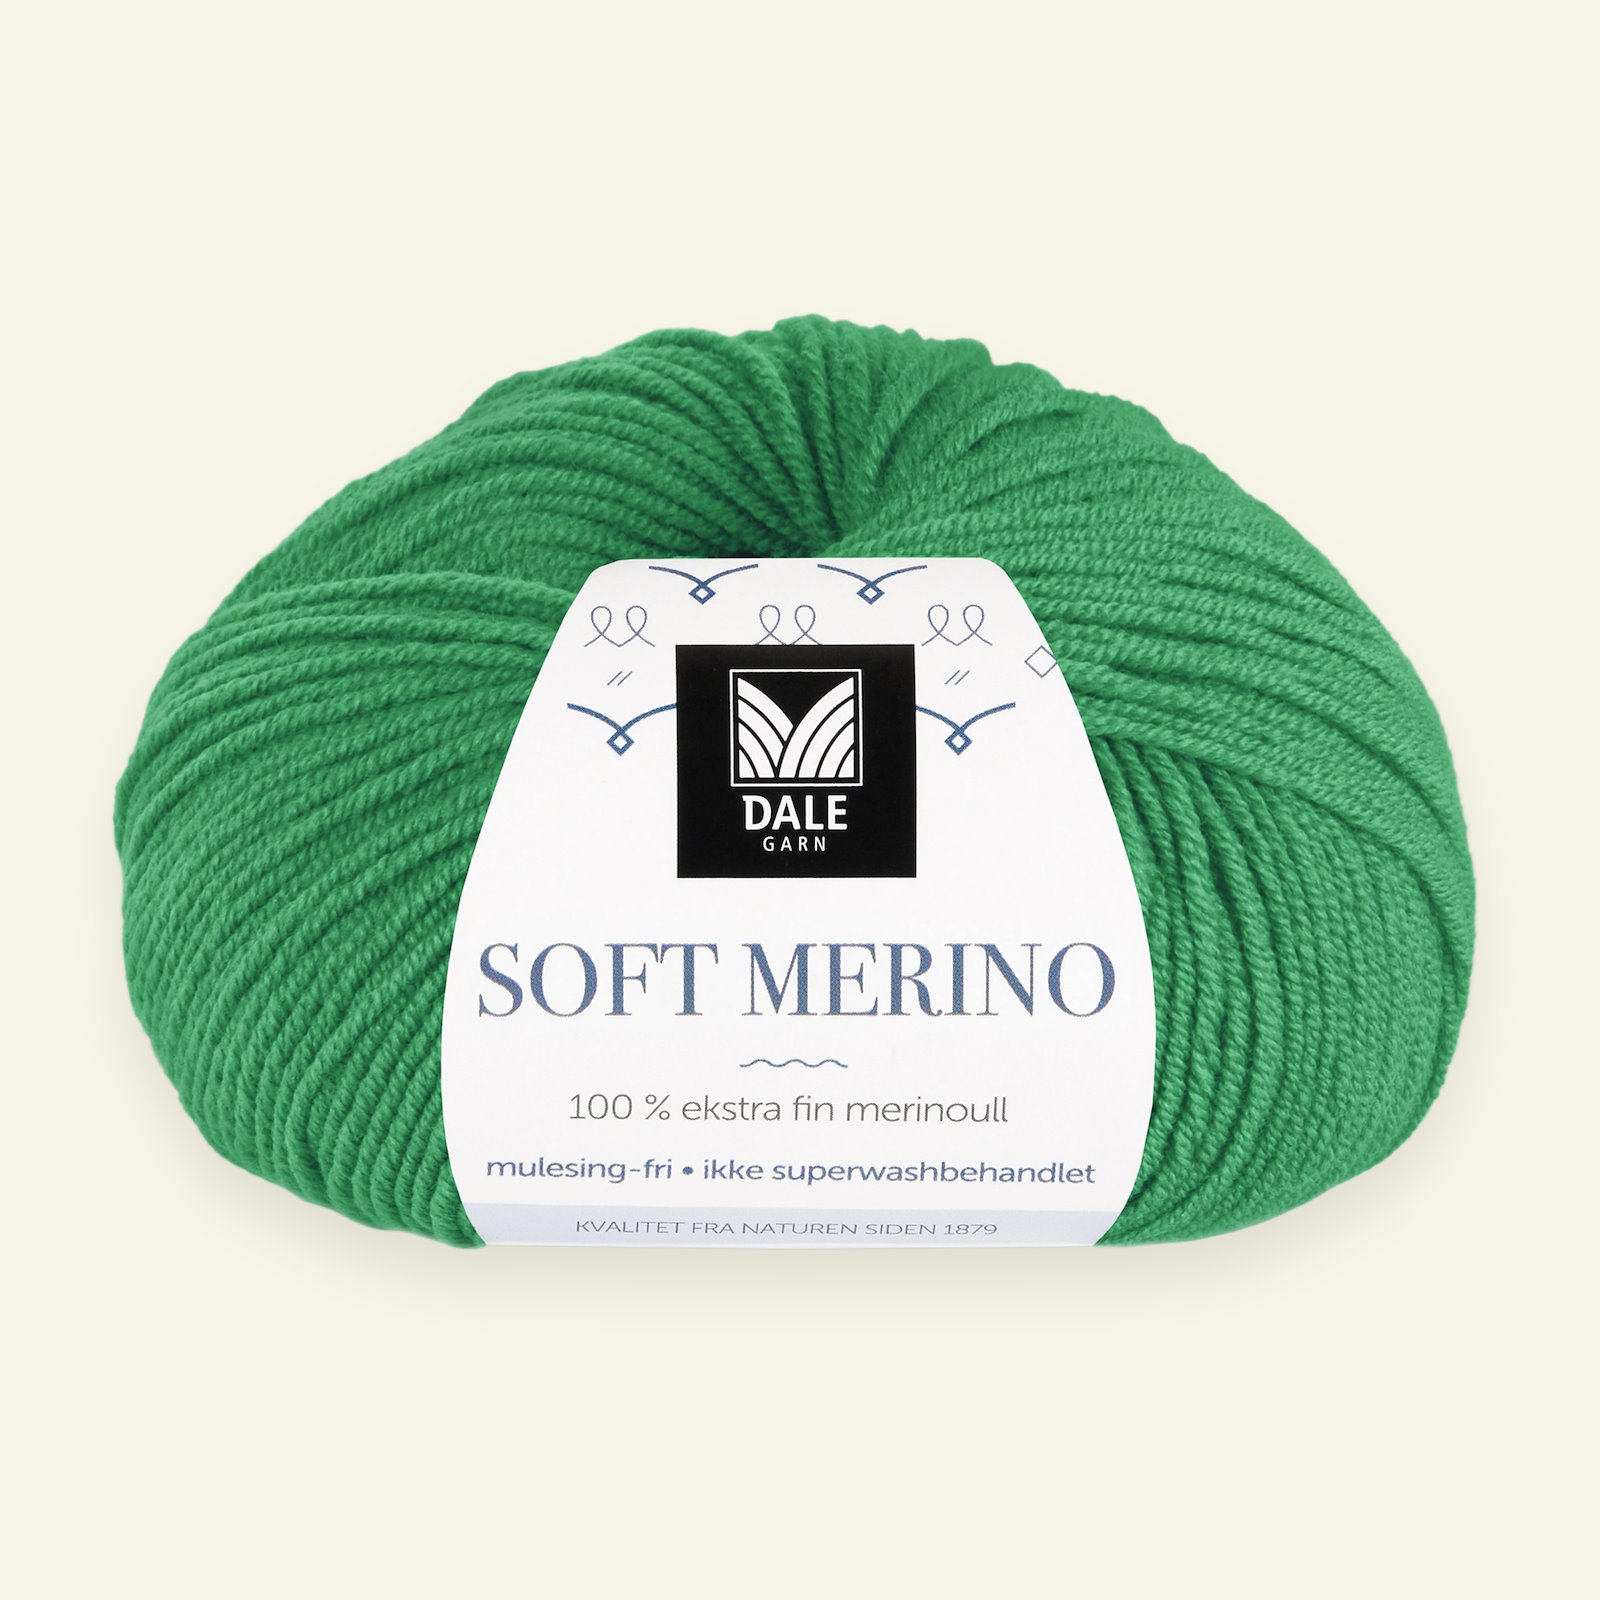 Dale Garn, 100% ekstra fint merinogarn "Soft Merino", grøn (3030) 90000351_pack